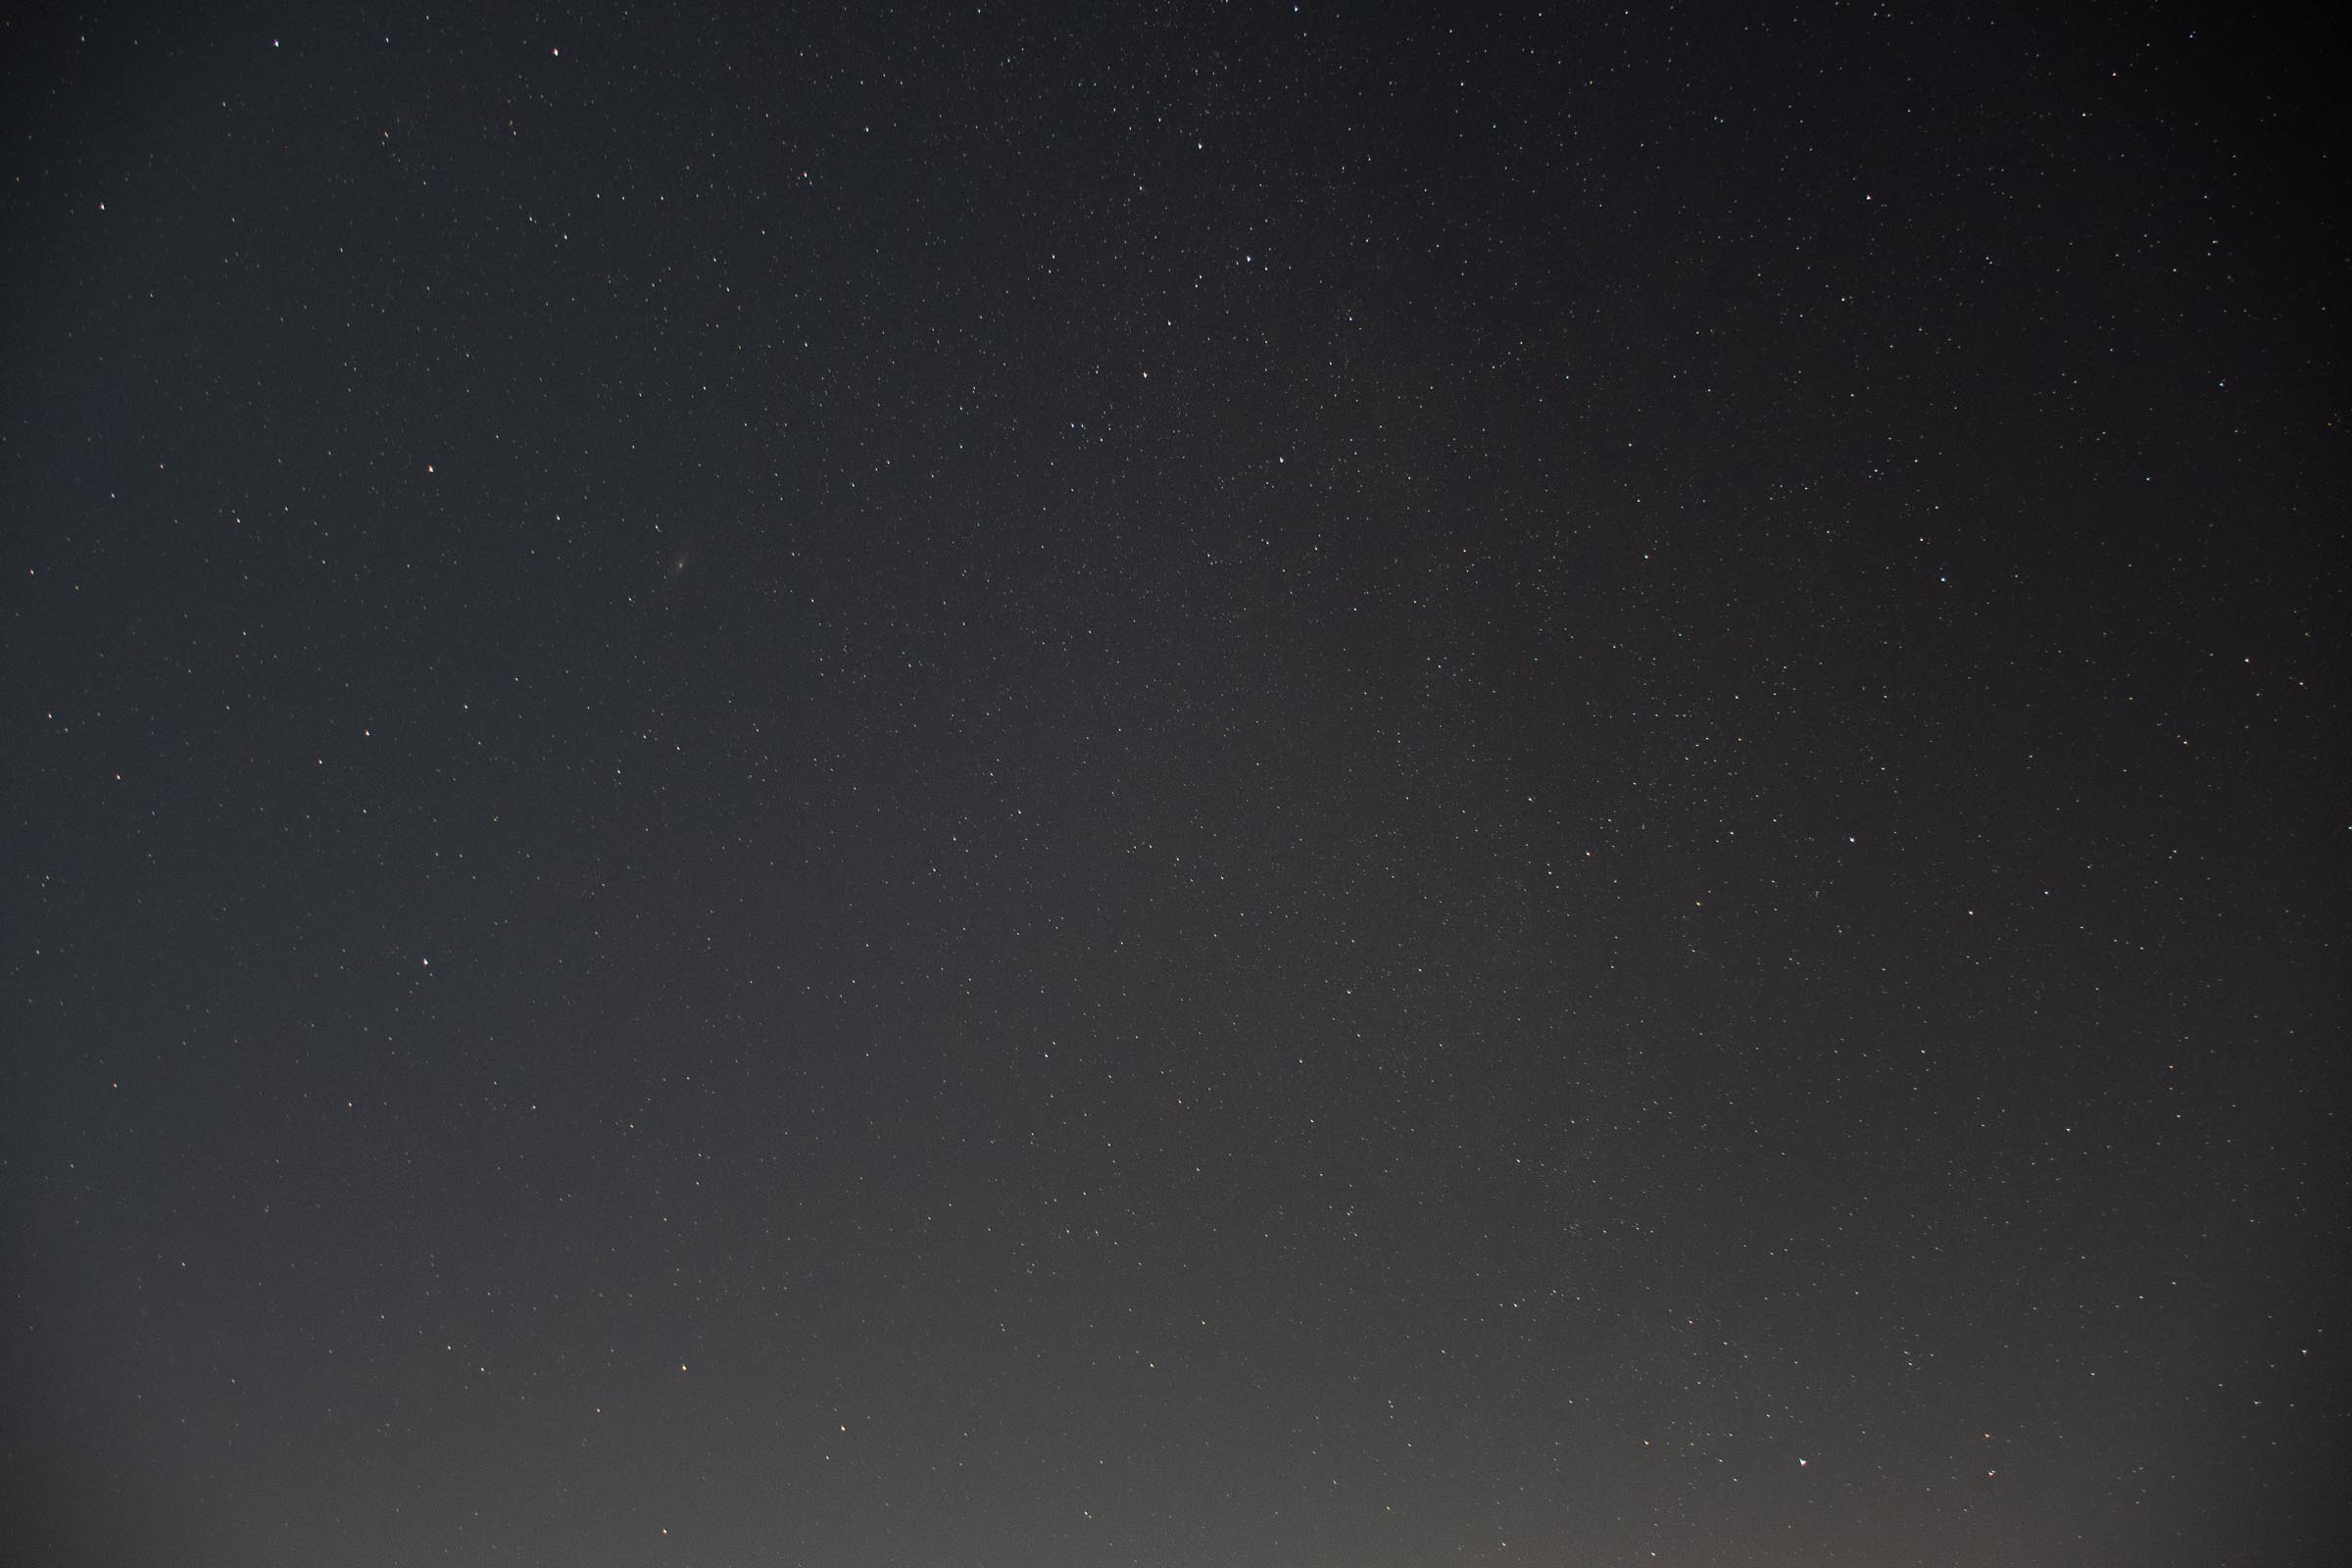 Night sky image taken with the Nikon D7500